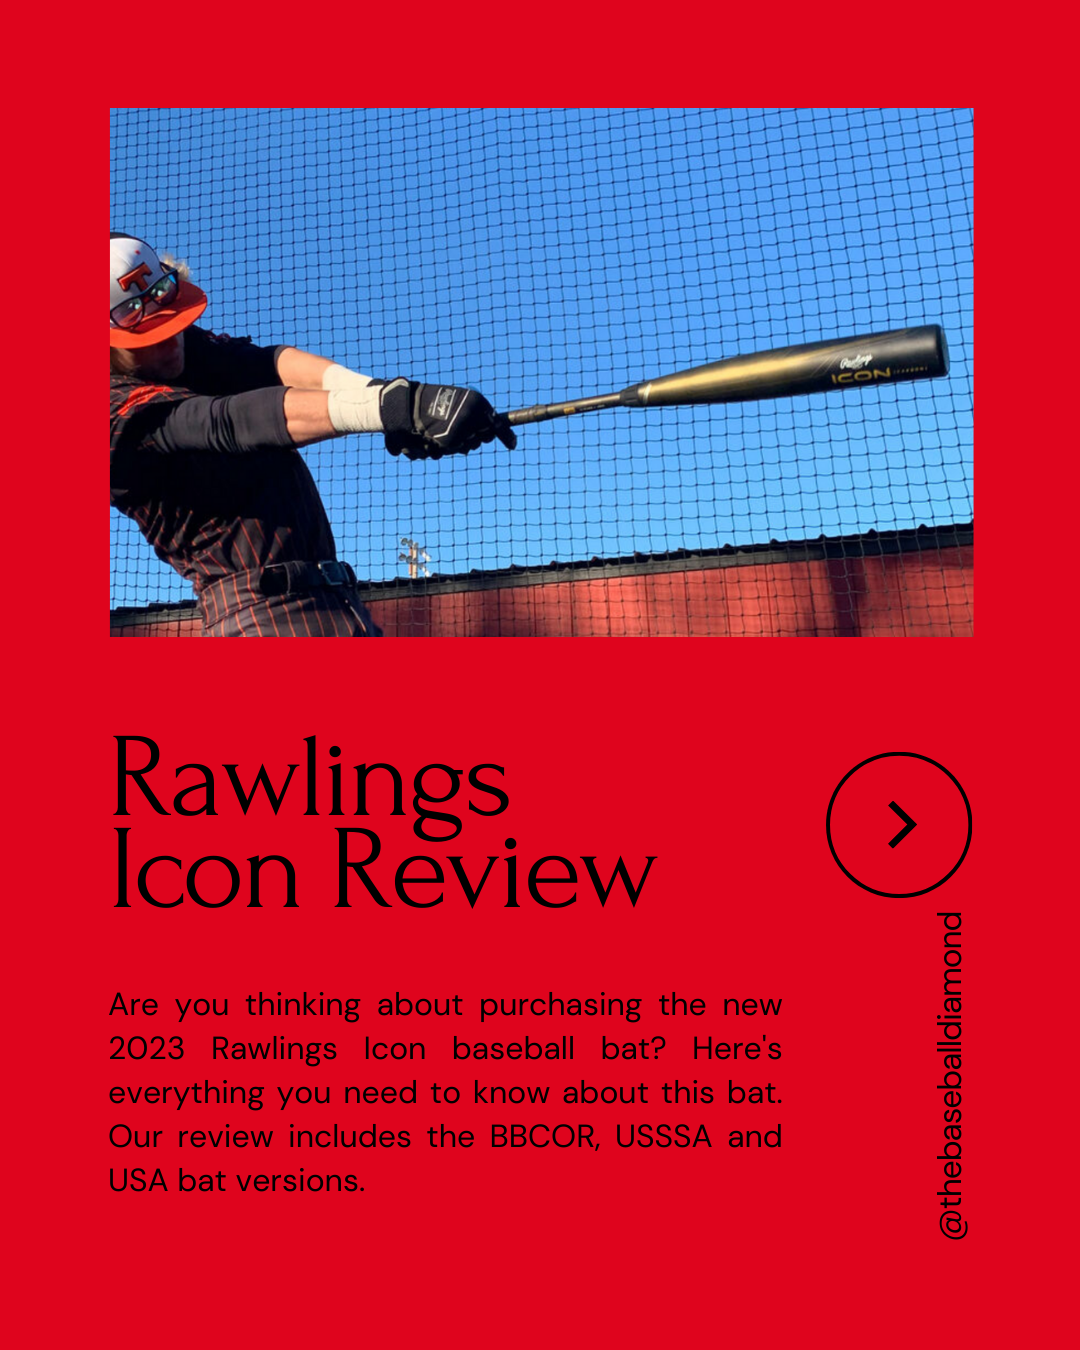 2023 Rawlings Icon Baseball Bat Review